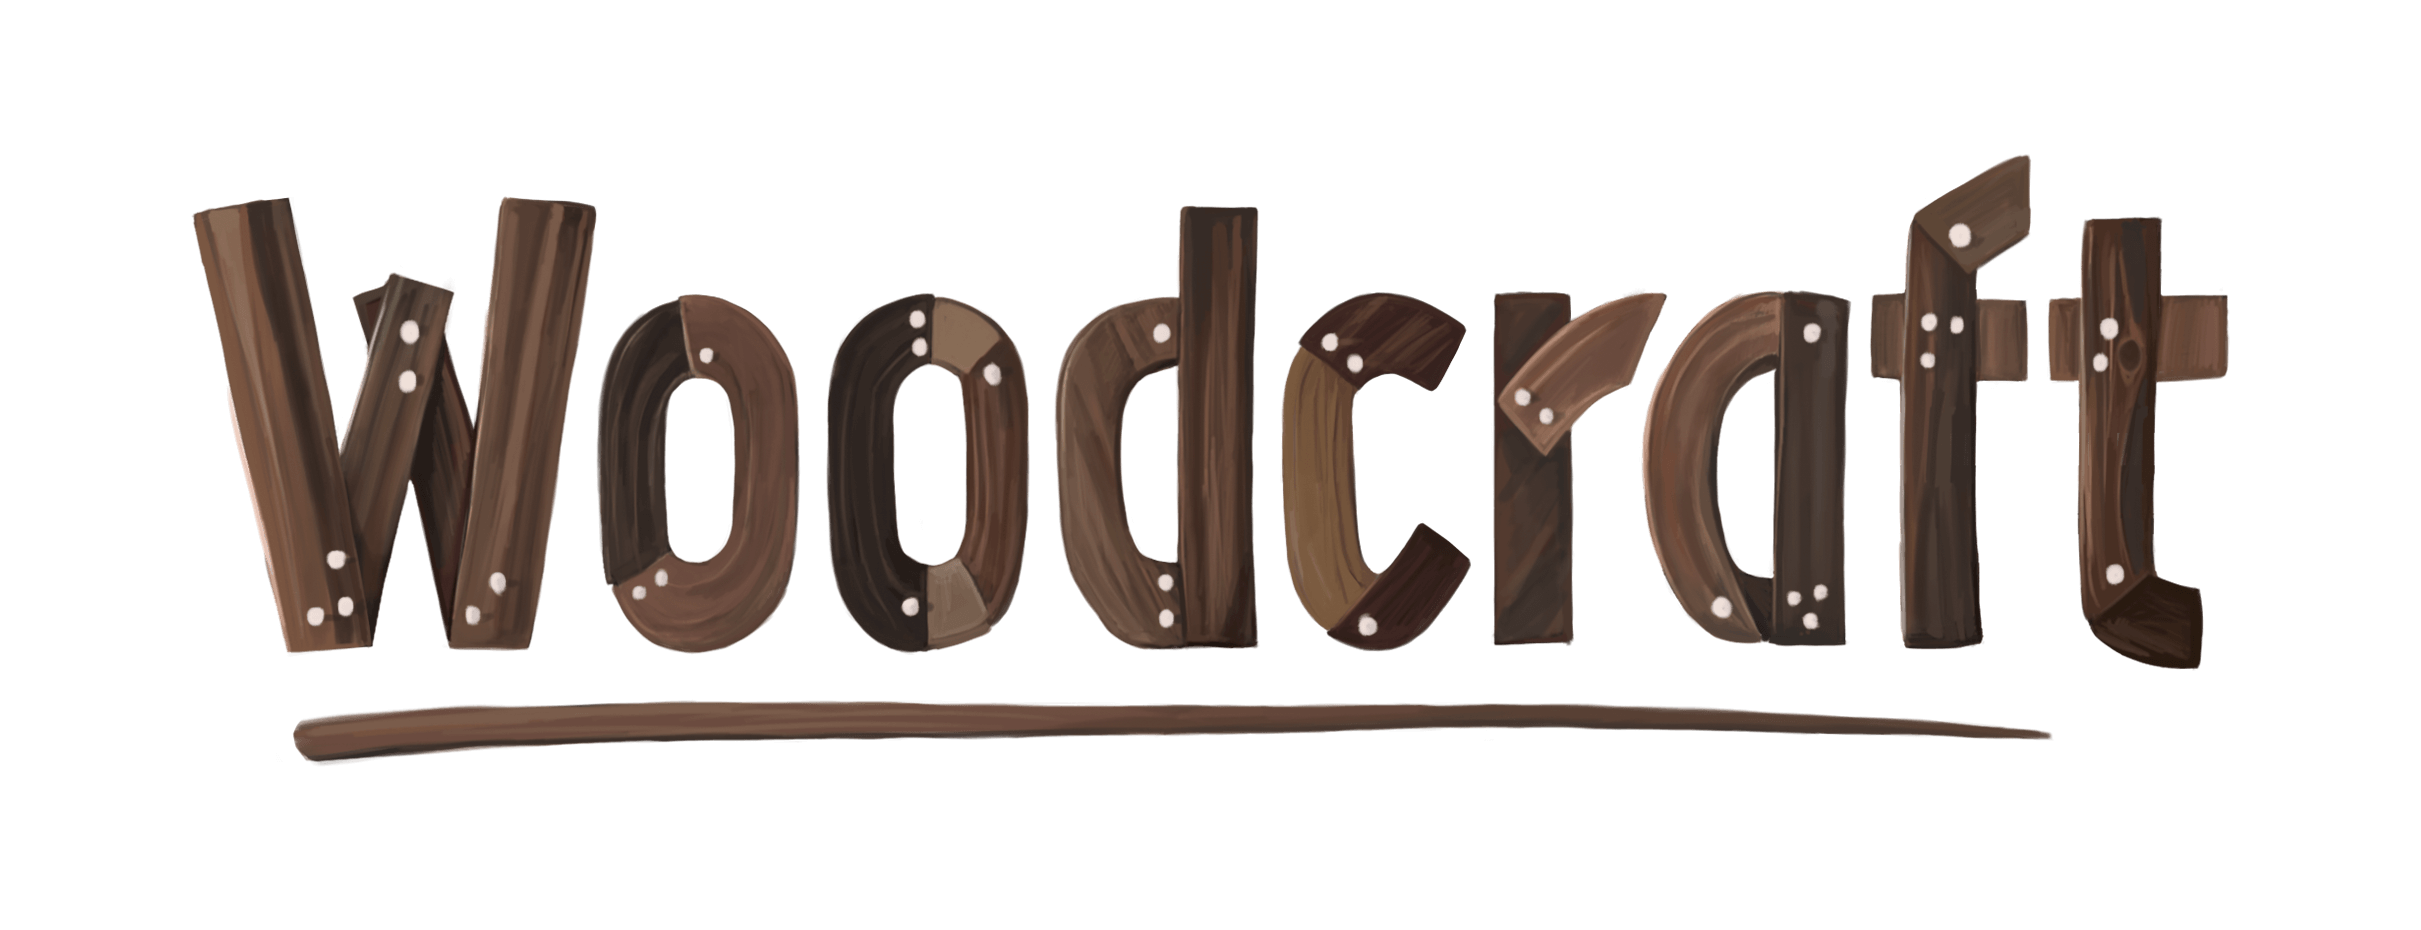 Woodcraft_Logo